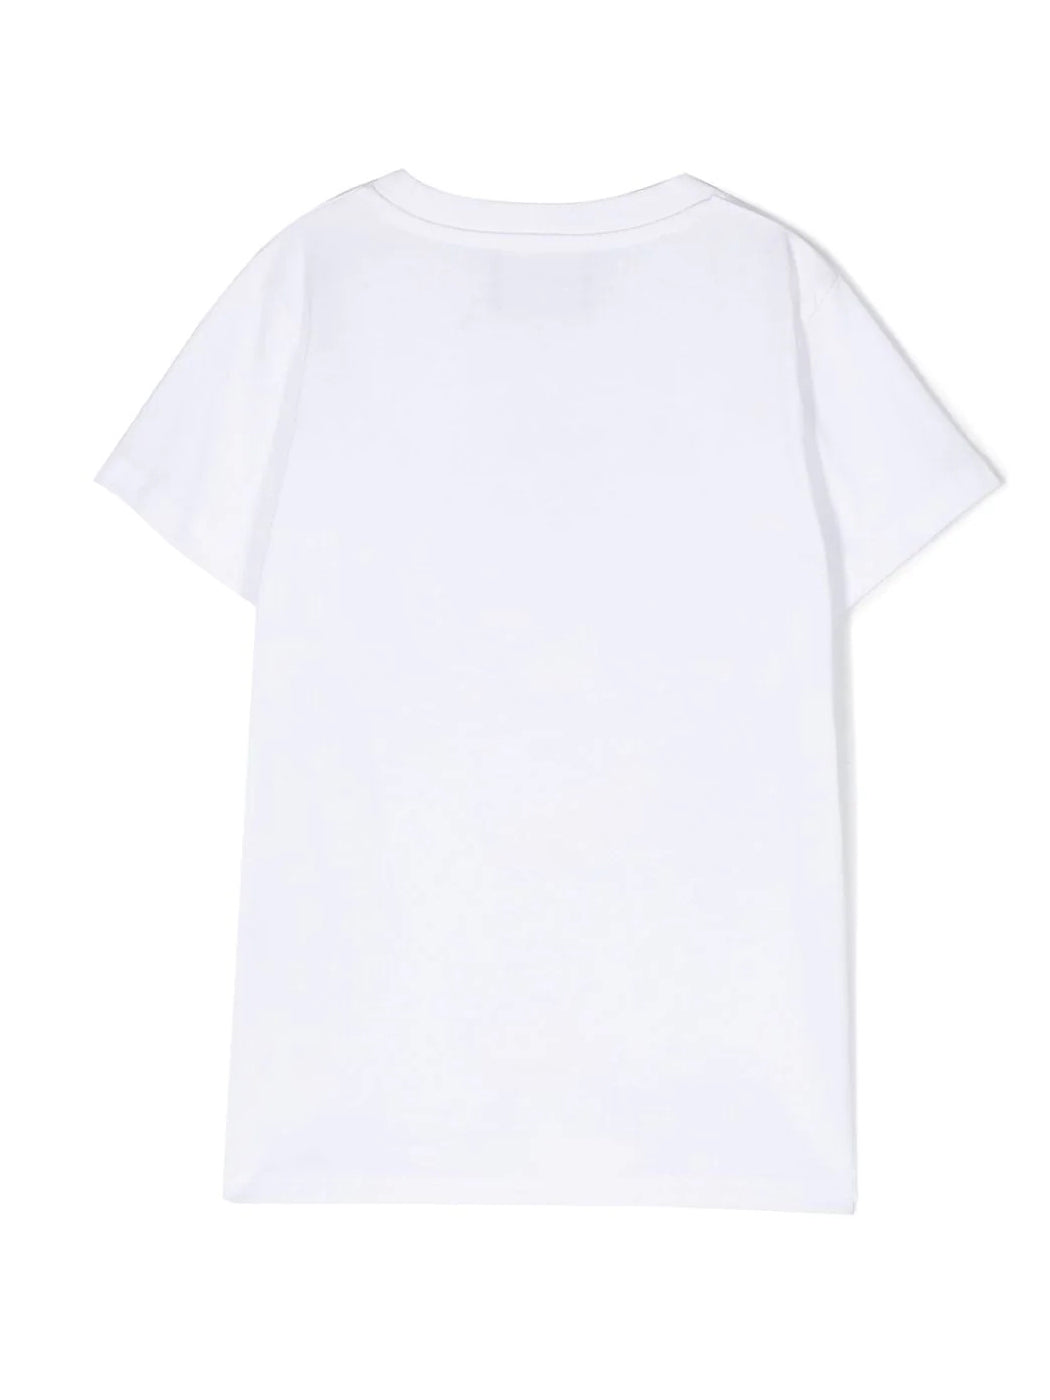 JOHN RICHMOND -Boy's T-shirt cotton with logo-print-RBP23019TS